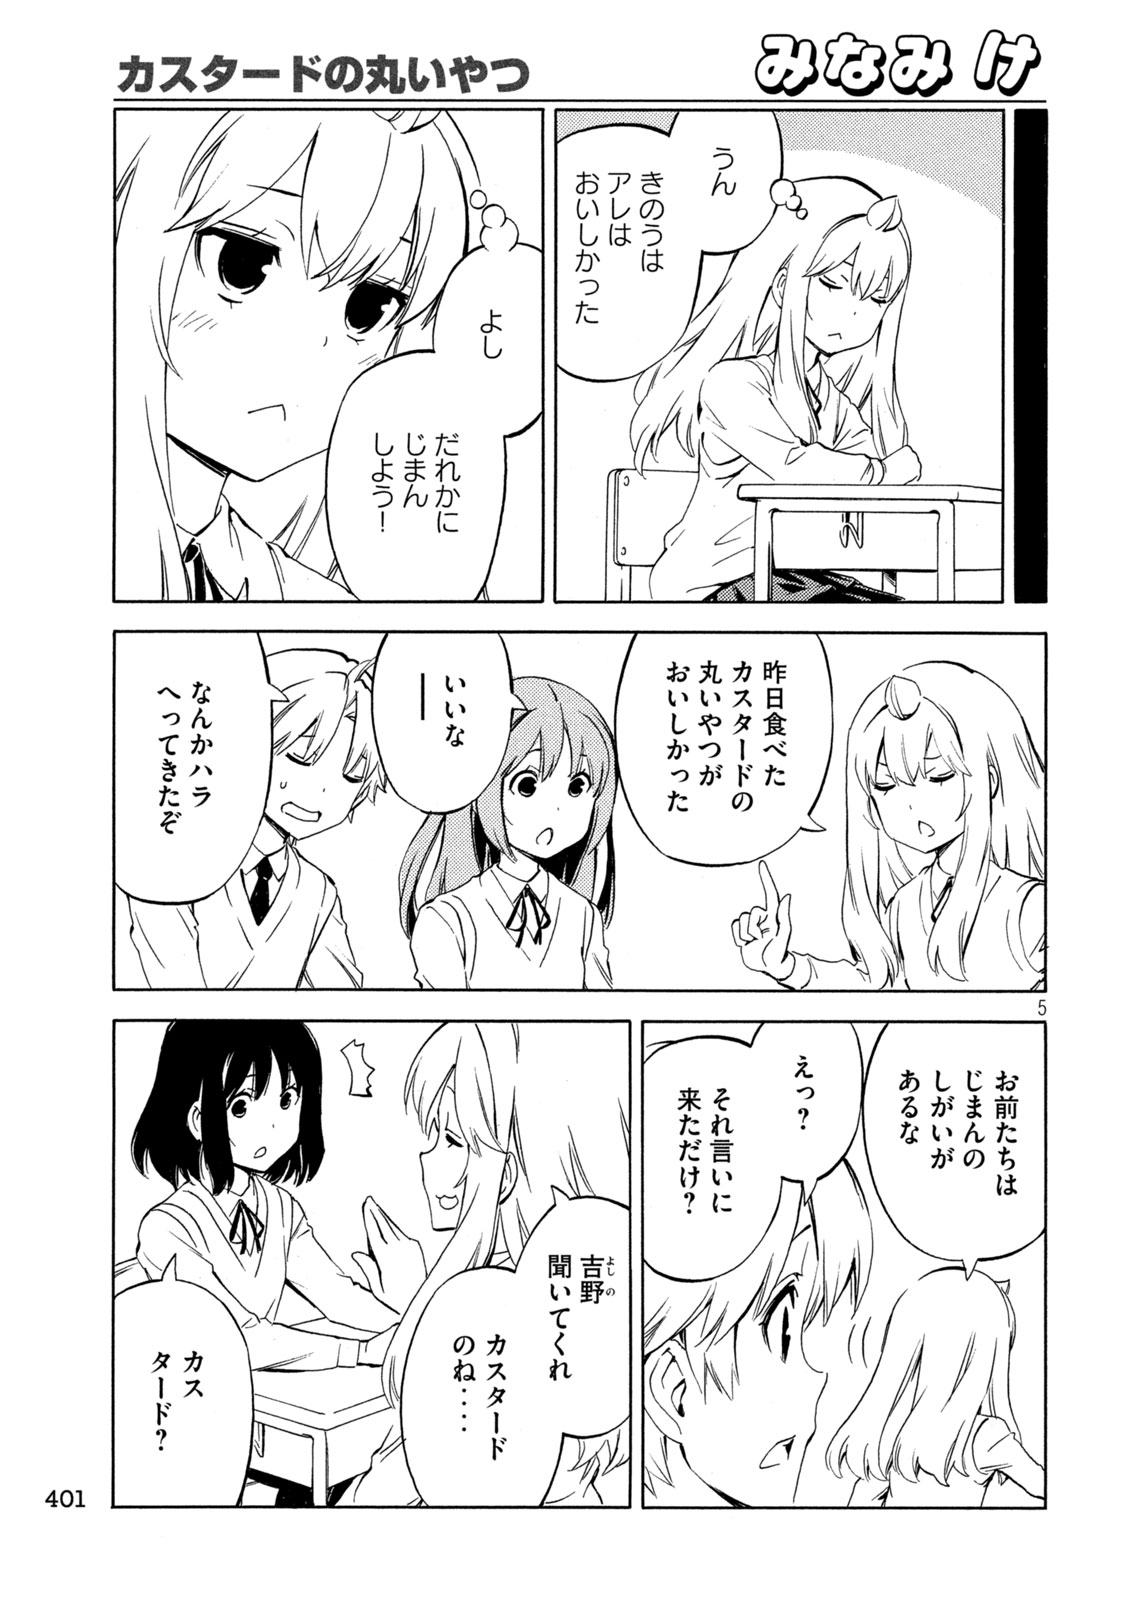 Minami-ke - Chapter 486 - Page 5